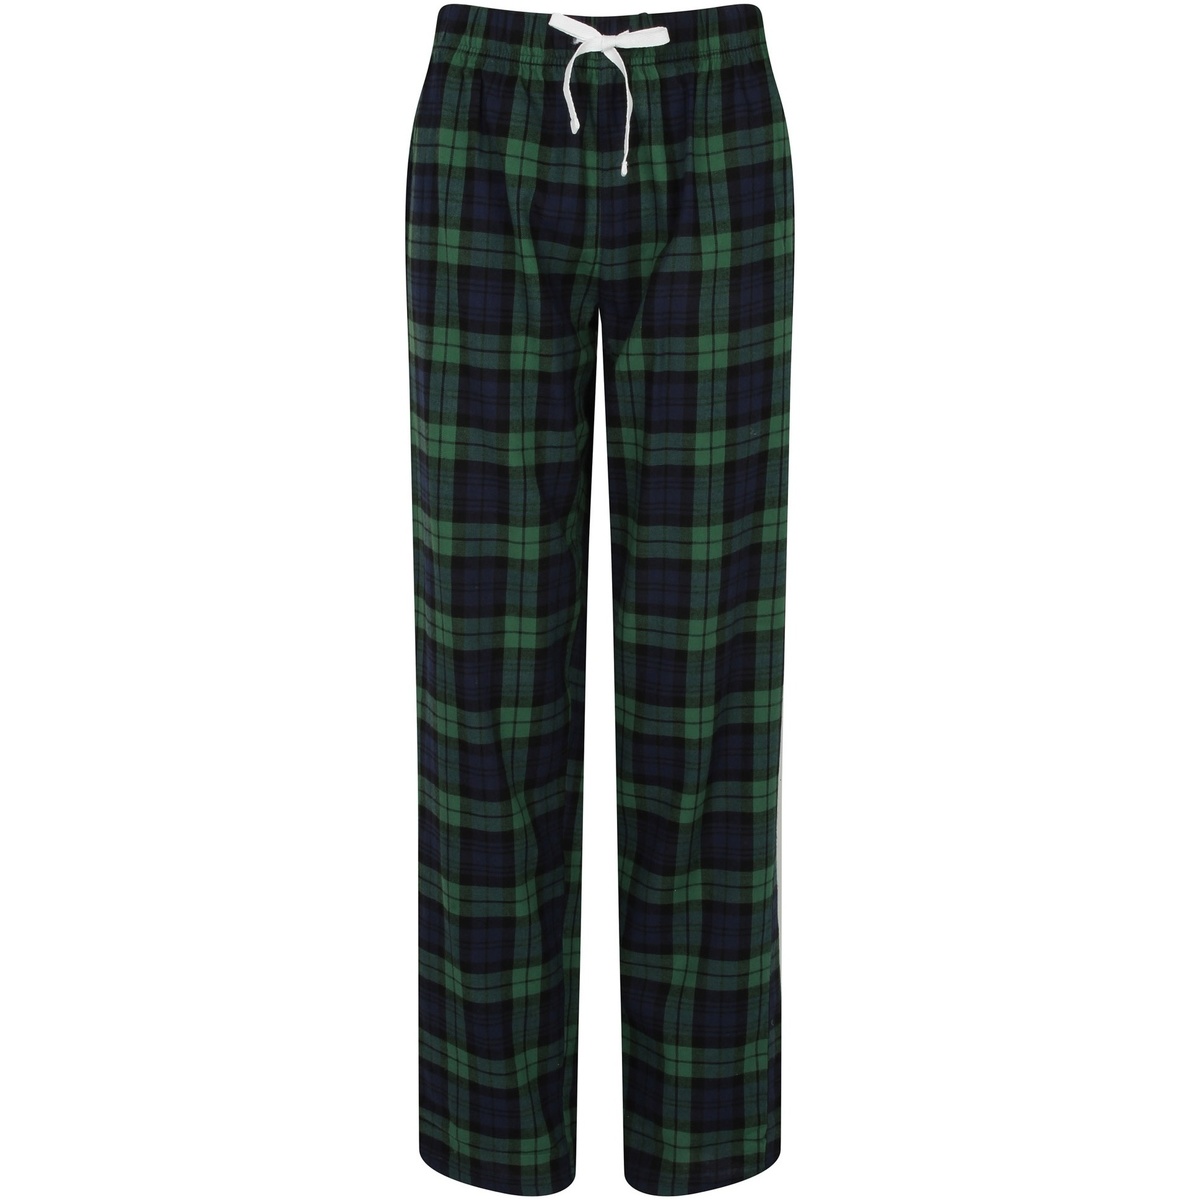 Abbigliamento Donna Pantaloni Skinni Fit Tartan Verde